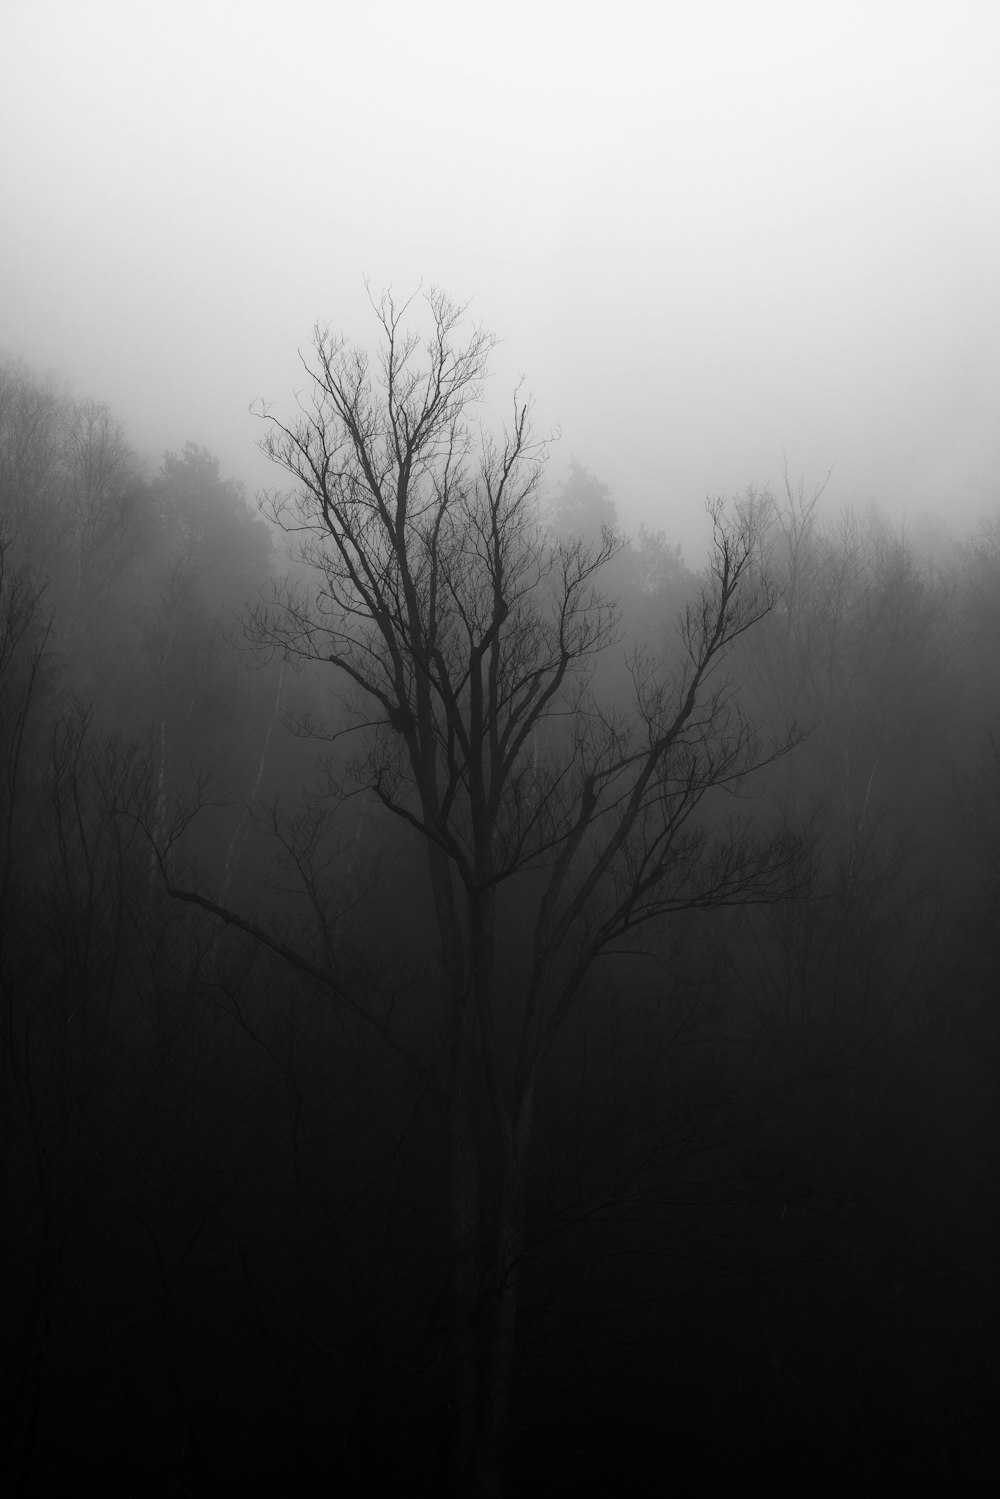 árvores nuas no tempo nebuloso